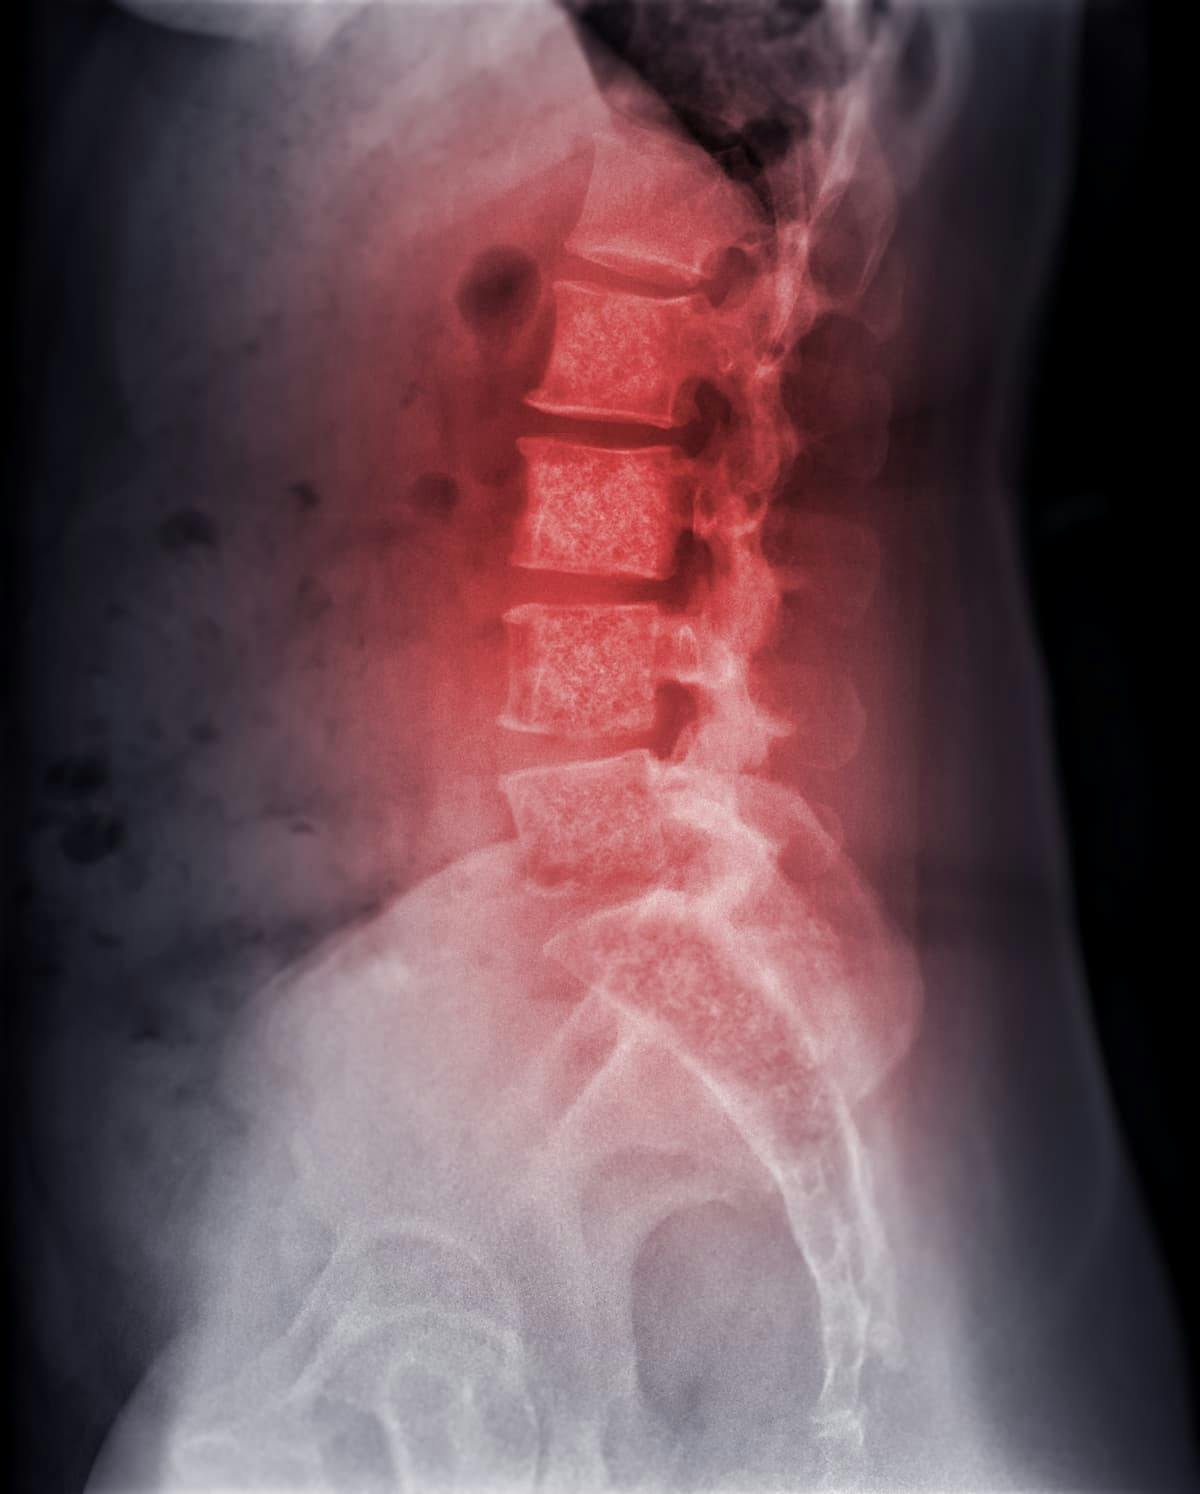 Stereotactic Radiosurgery Does Not Reduce Pain Vs EBRT in Vertebral Metastases | Image Credit: © samunella - stock.adobe.com.